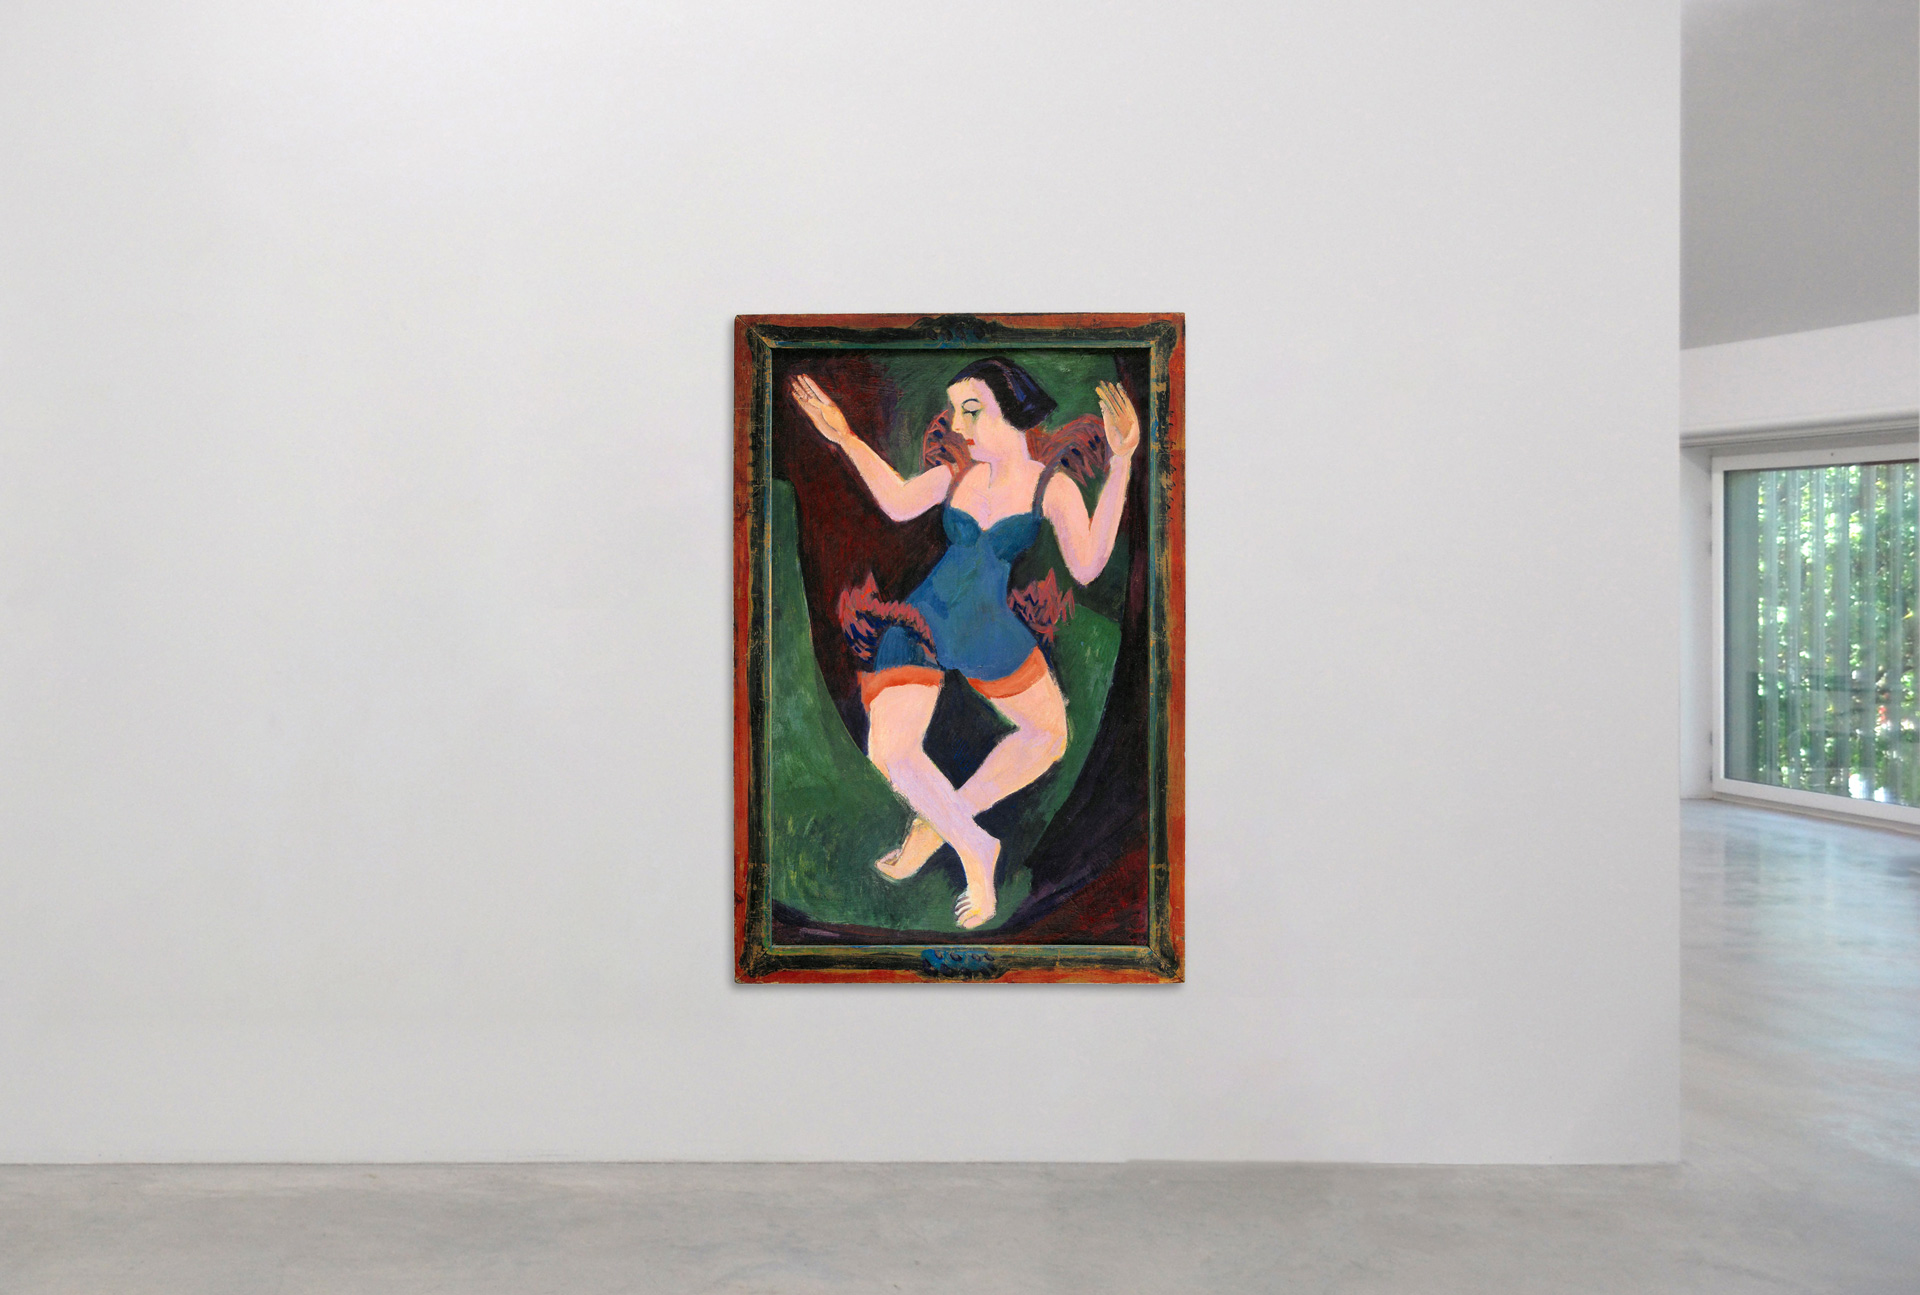 Ernst Ludwig Kirchner, *Tänzerin Nina Hard*, 1921, Oil on canvas, 80 x 126 cm, Horst and Gabriele Siedle Art Collection